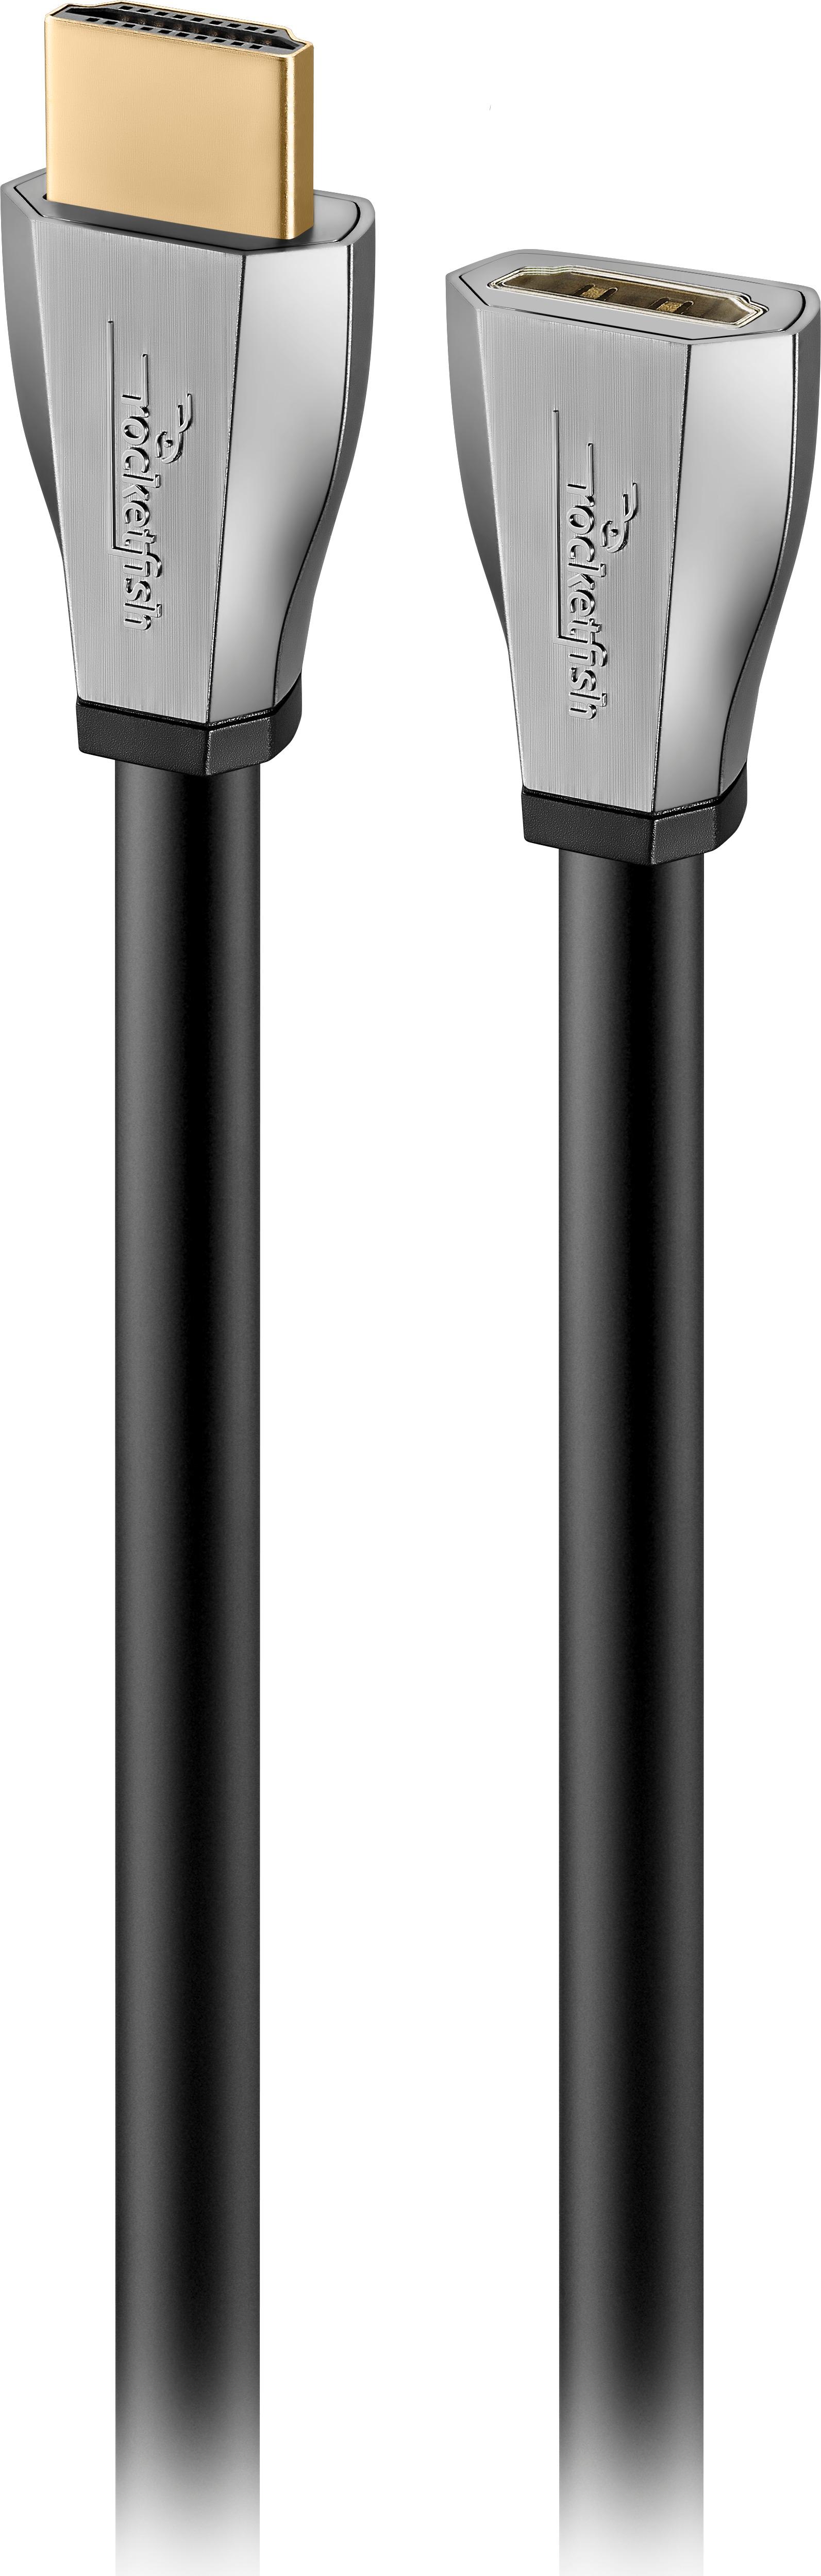 Rocketfish™ - 4' 4K Ultra HD HDMI Extension Cable - Black/silver